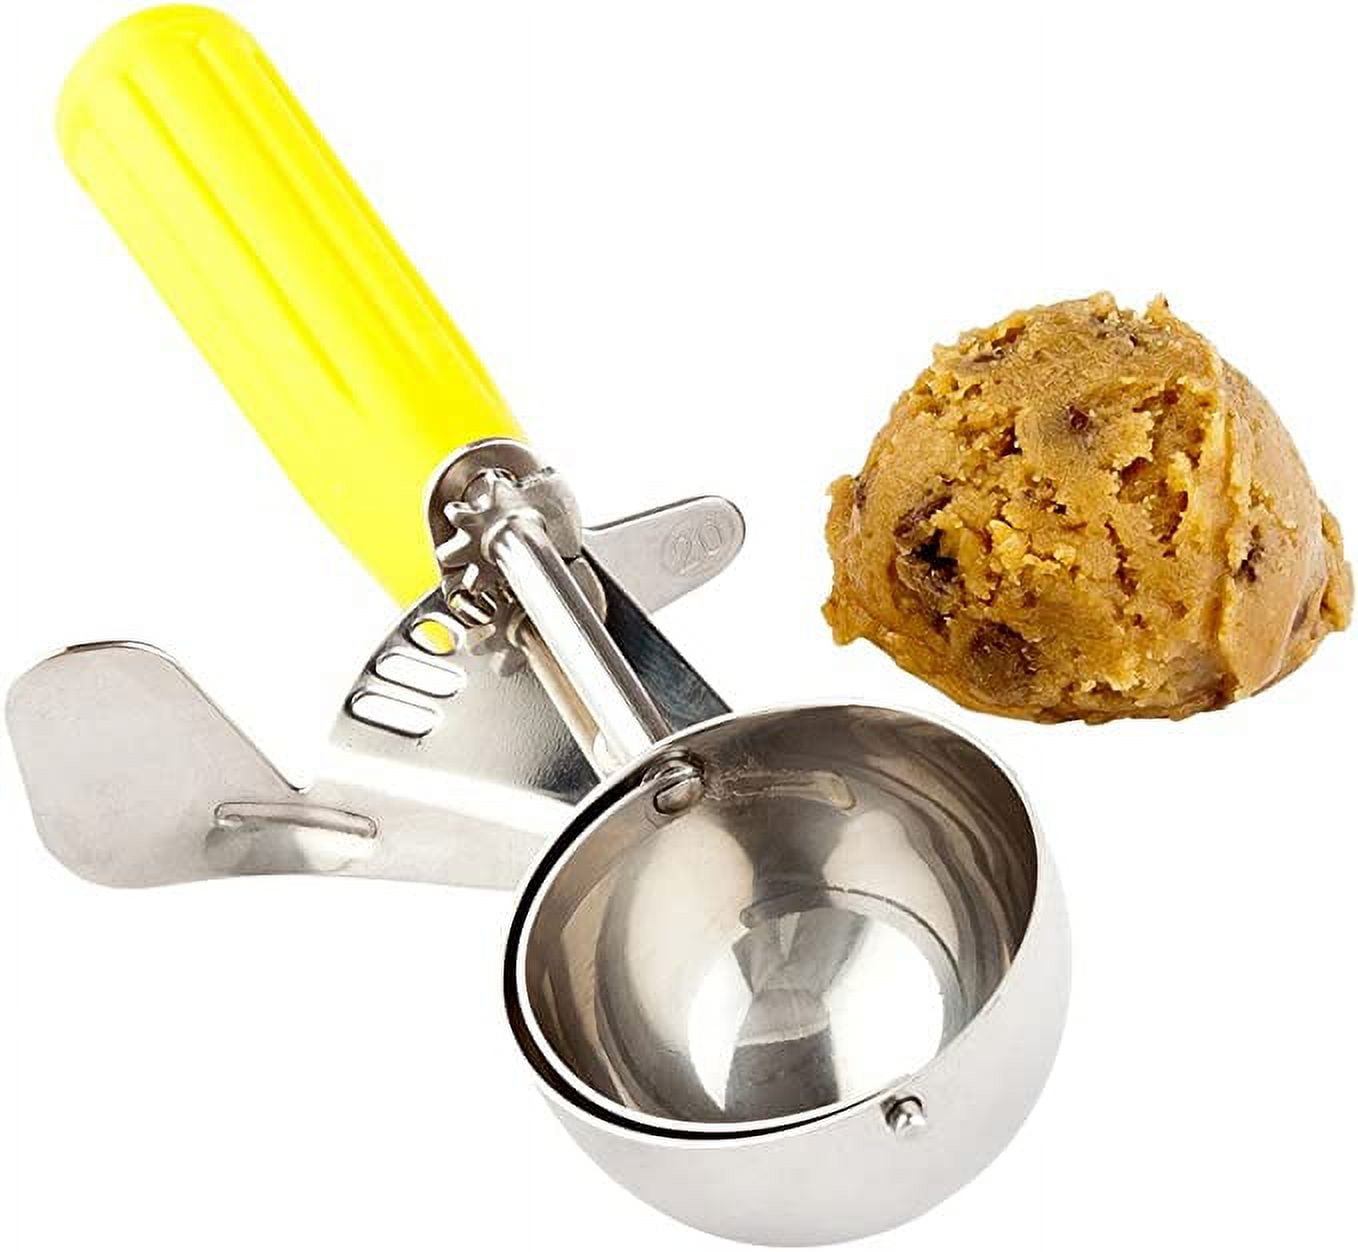 Portion Scoop - #20 (1.52 oz) - Disher Scoop, Cookie Scoop, Food Scoop -  Portion Control - 18/8 Stainless Steel, Yellow Handle